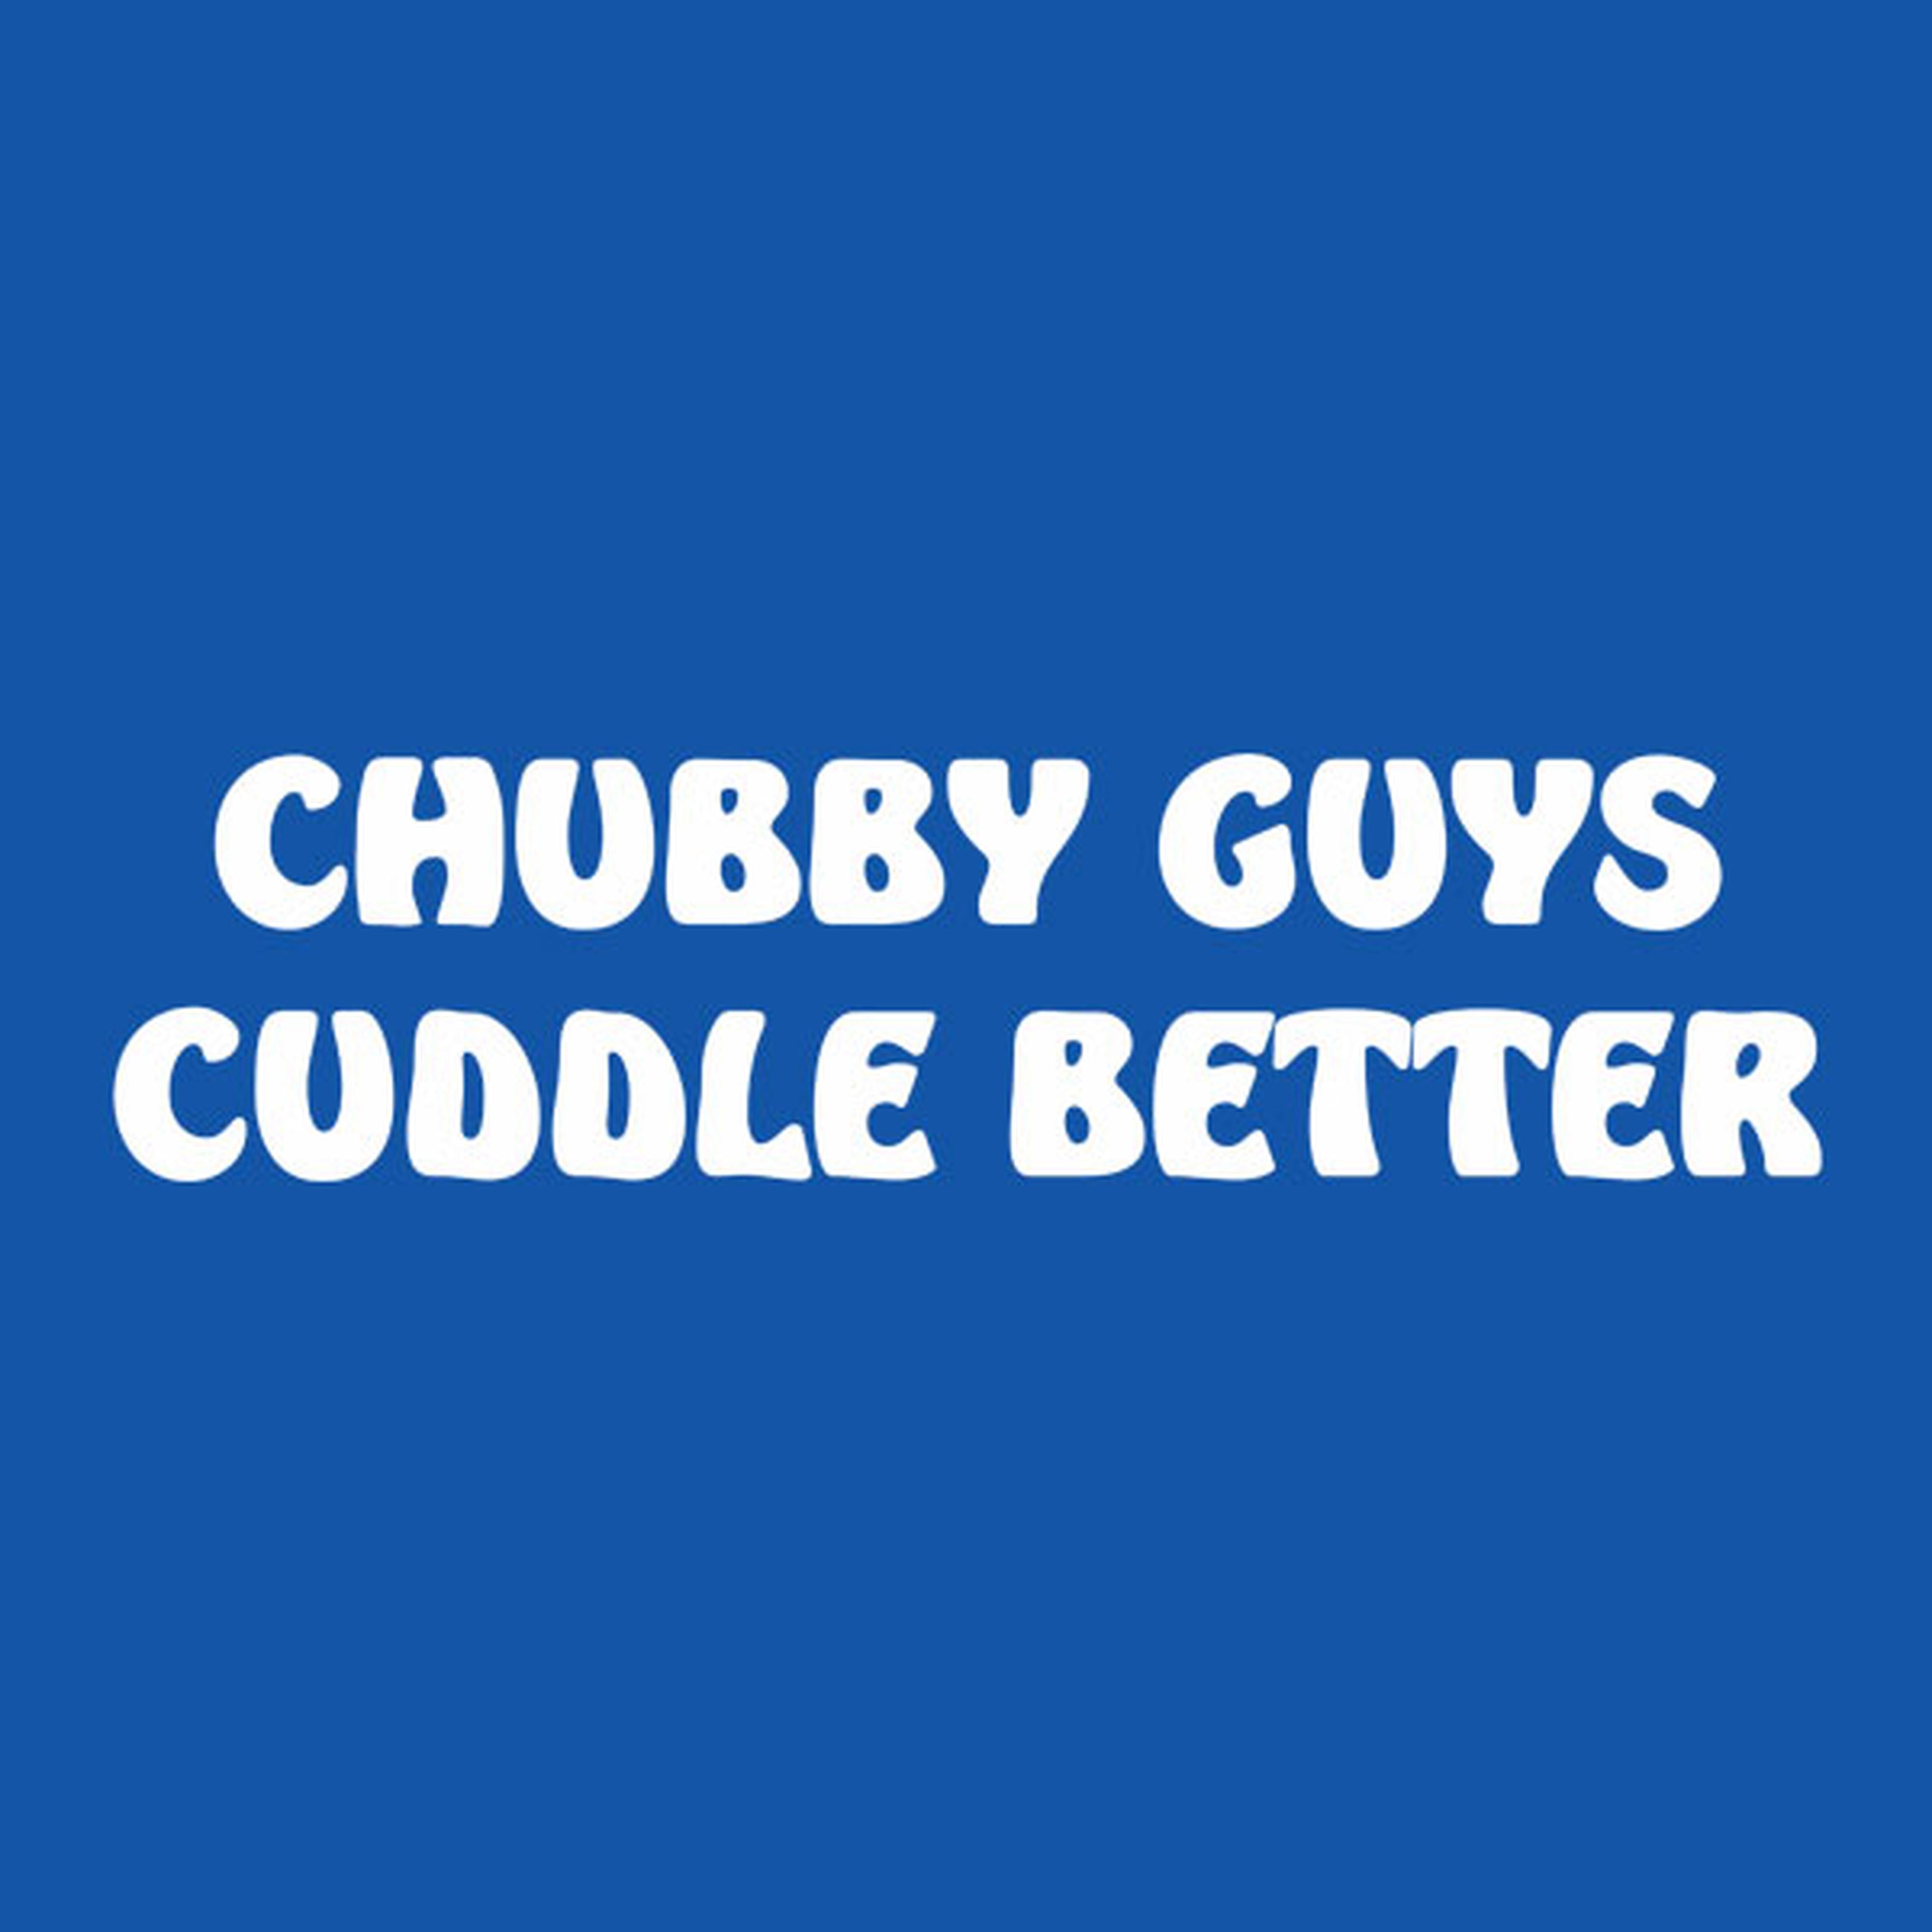 Chubby guys cuddle better